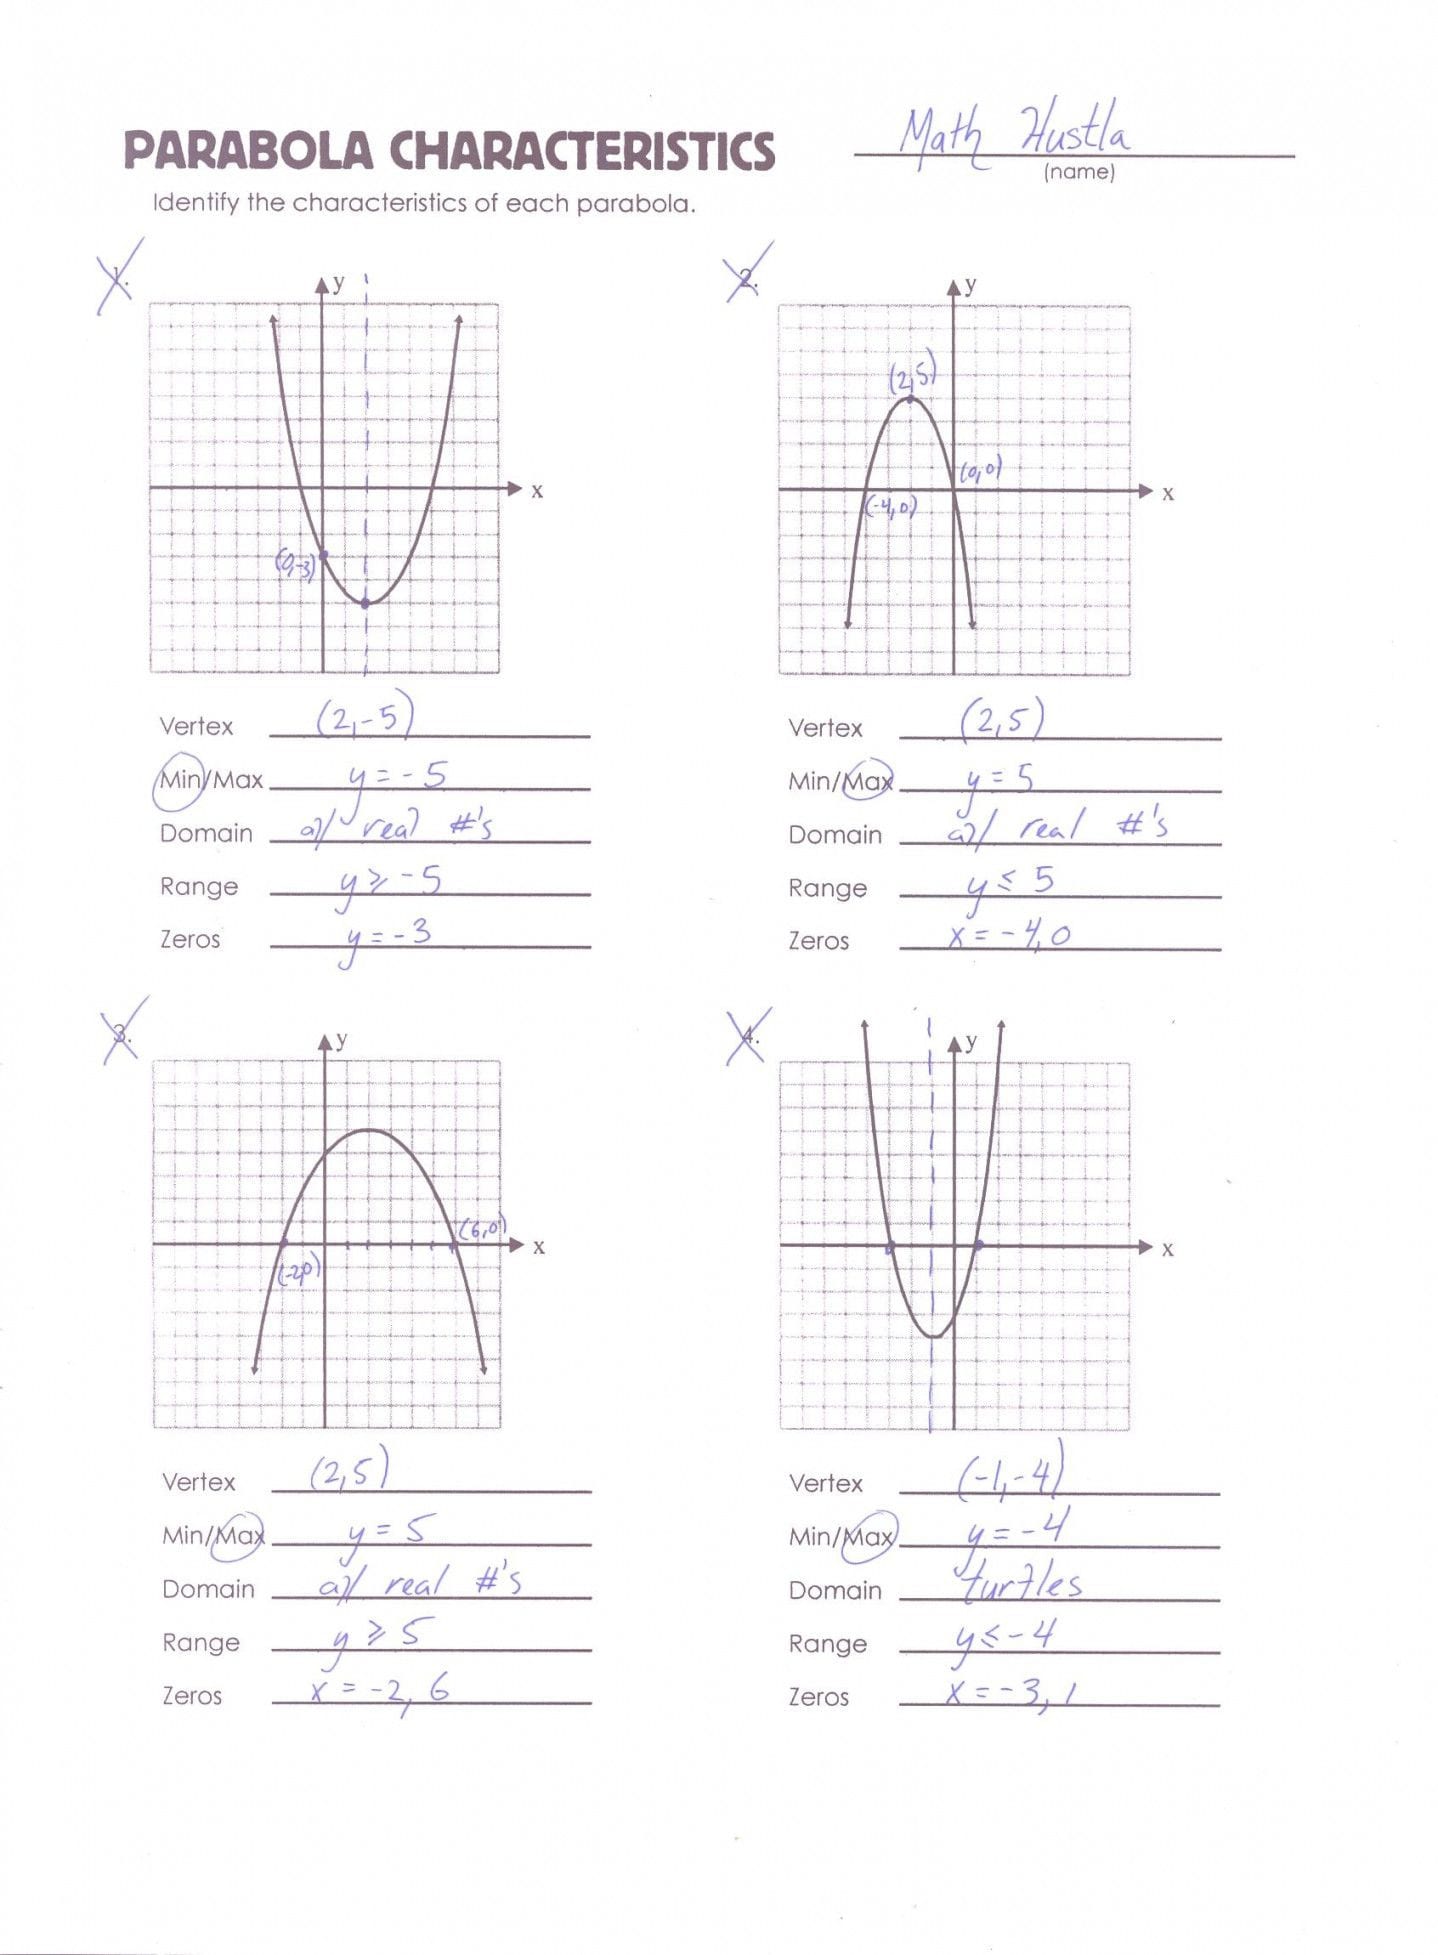 Graphing Quadratics Review Worksheet